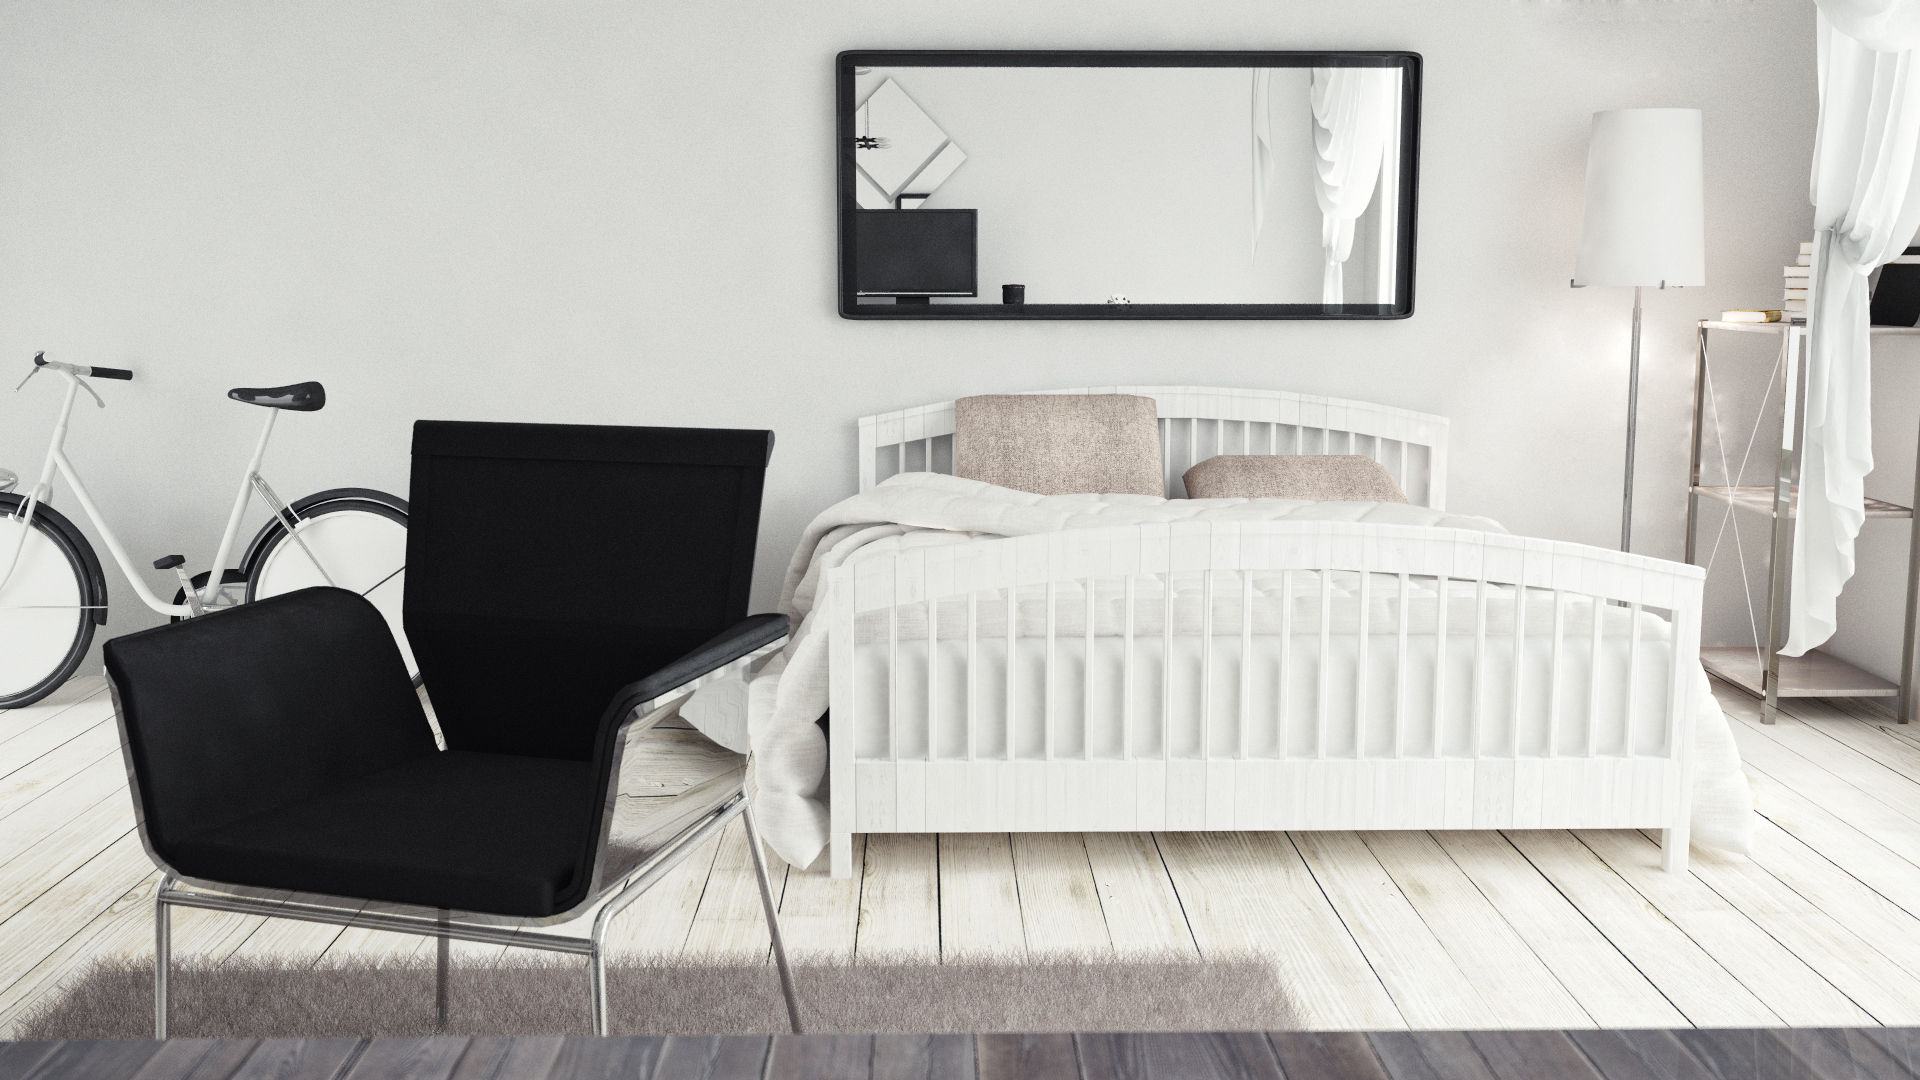 The White Room, V Multimedia V Multimedia Dormitorios minimalistas